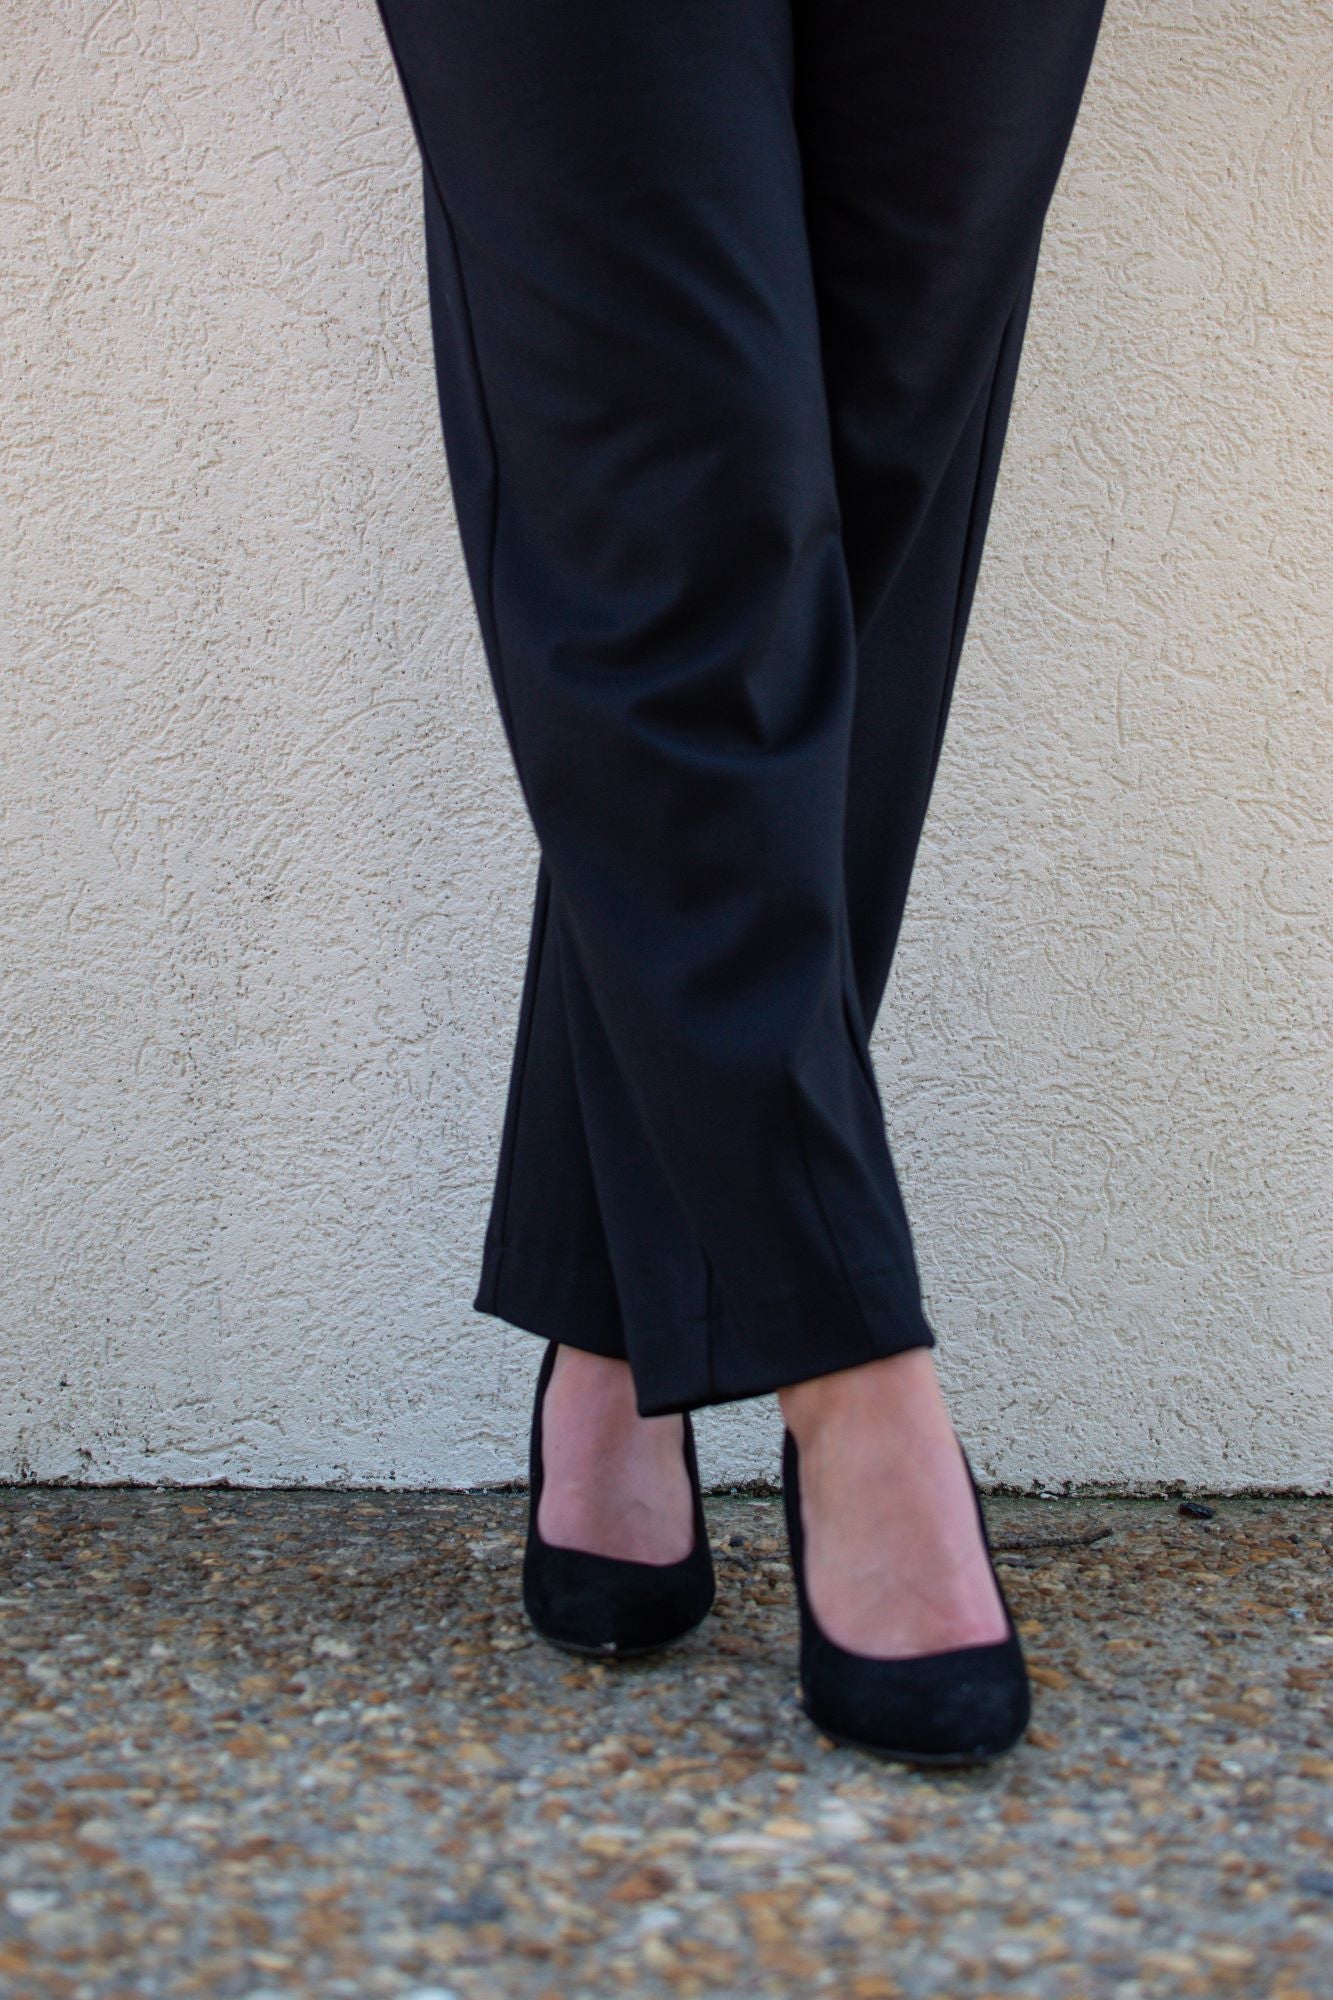 Arizona | Black Knit Pants With Pockets and Darts on Hem.